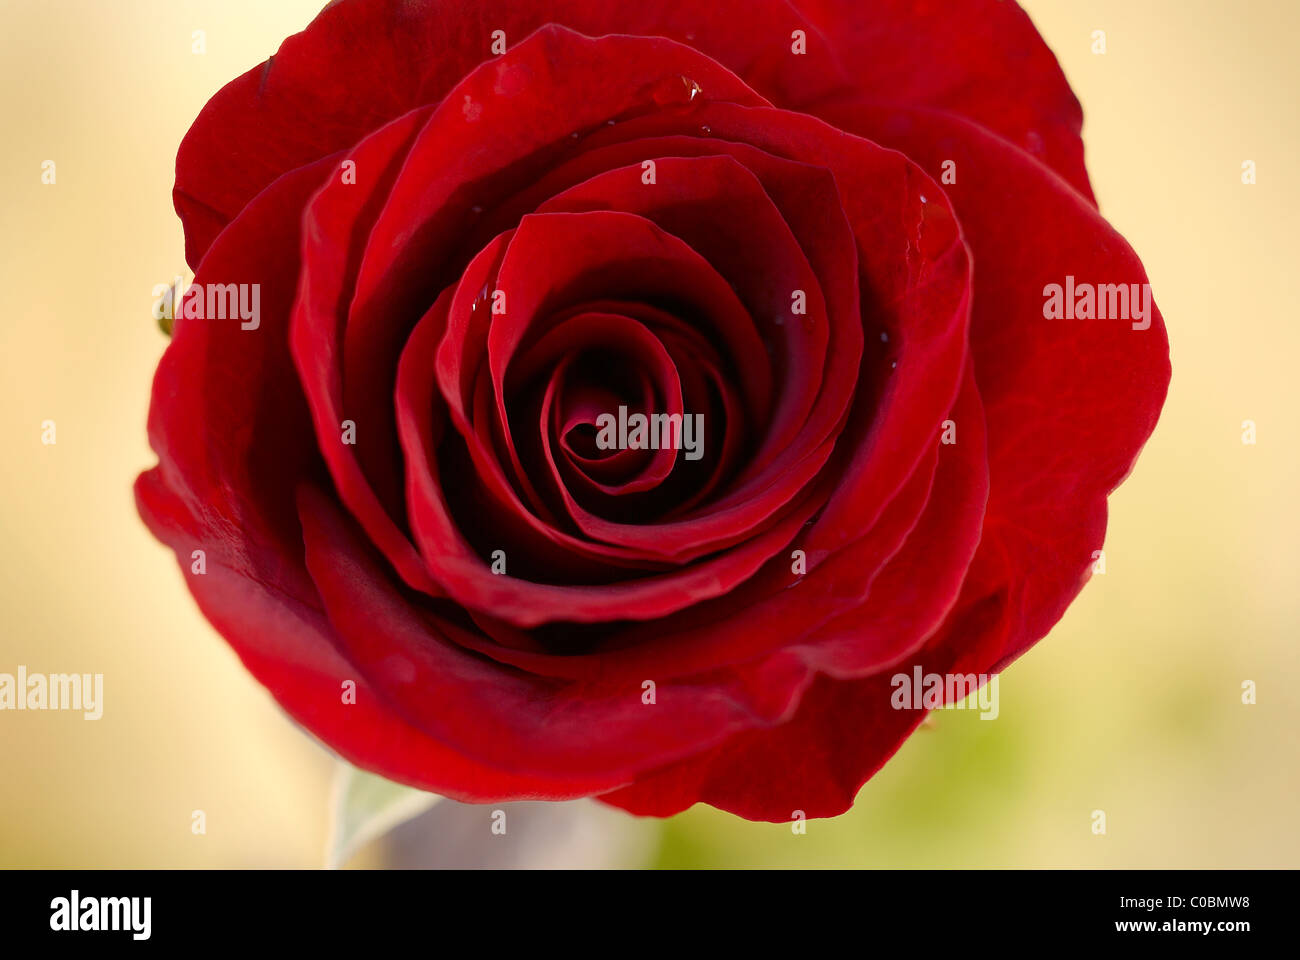 red rose, rose stem, close-up rose, red rose, rose petal, red rose petal, macro rose stem, close up rose stem Stock Photo